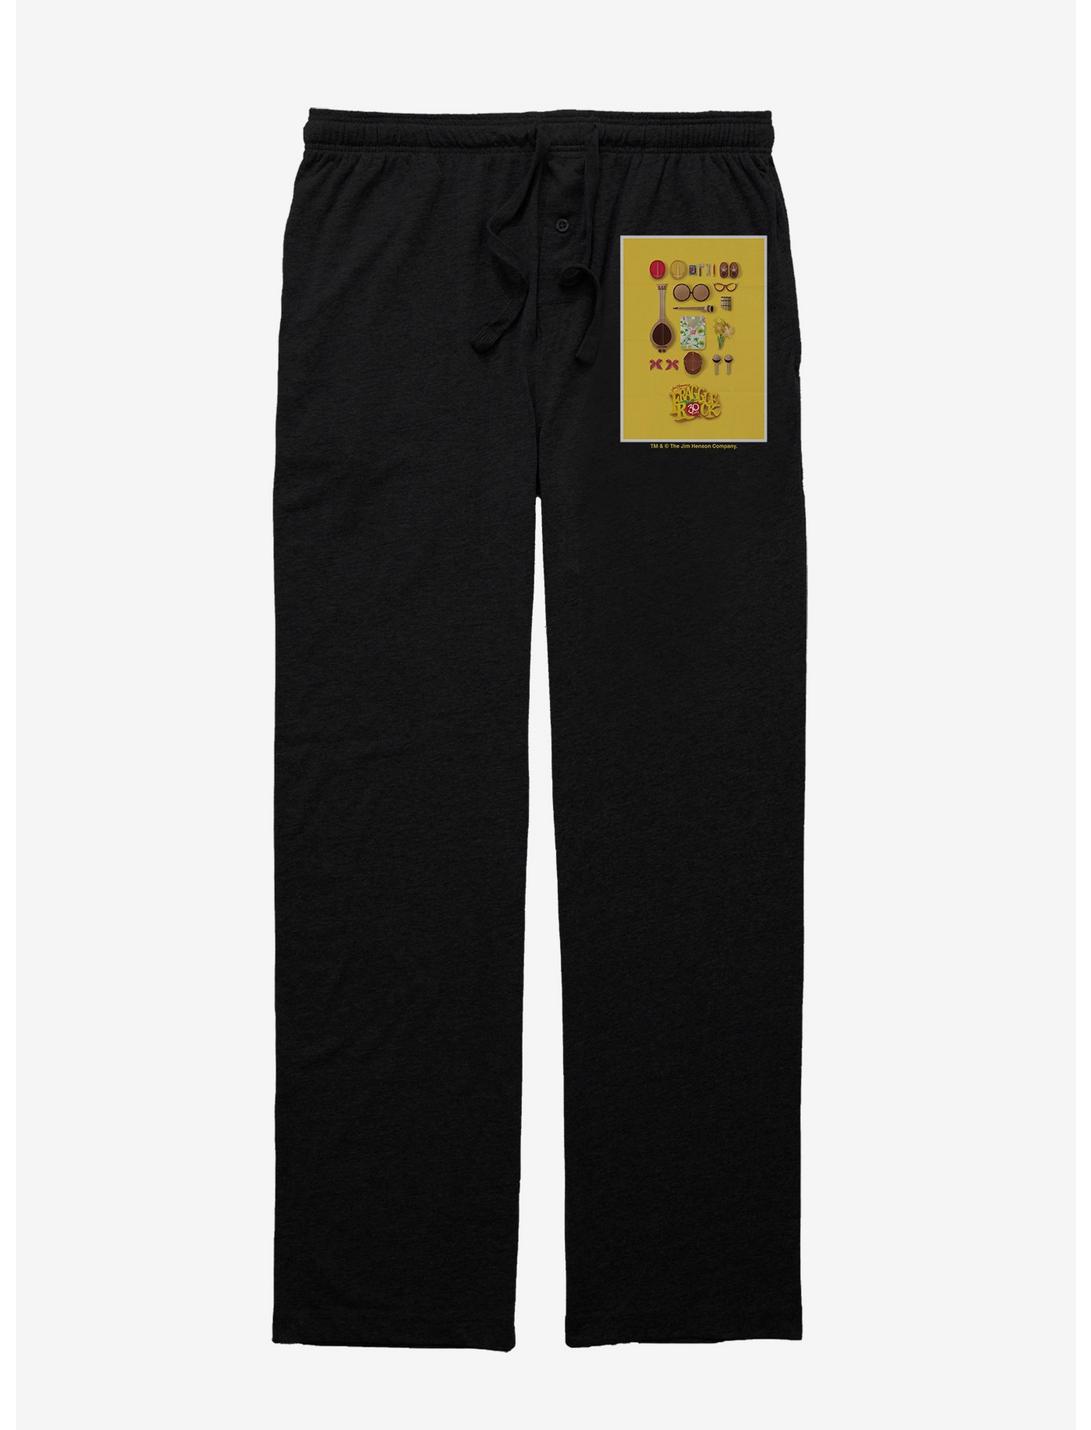 Jim Henson's Fraggle Rock 30 Years Pajama Pants, BLACK, hi-res